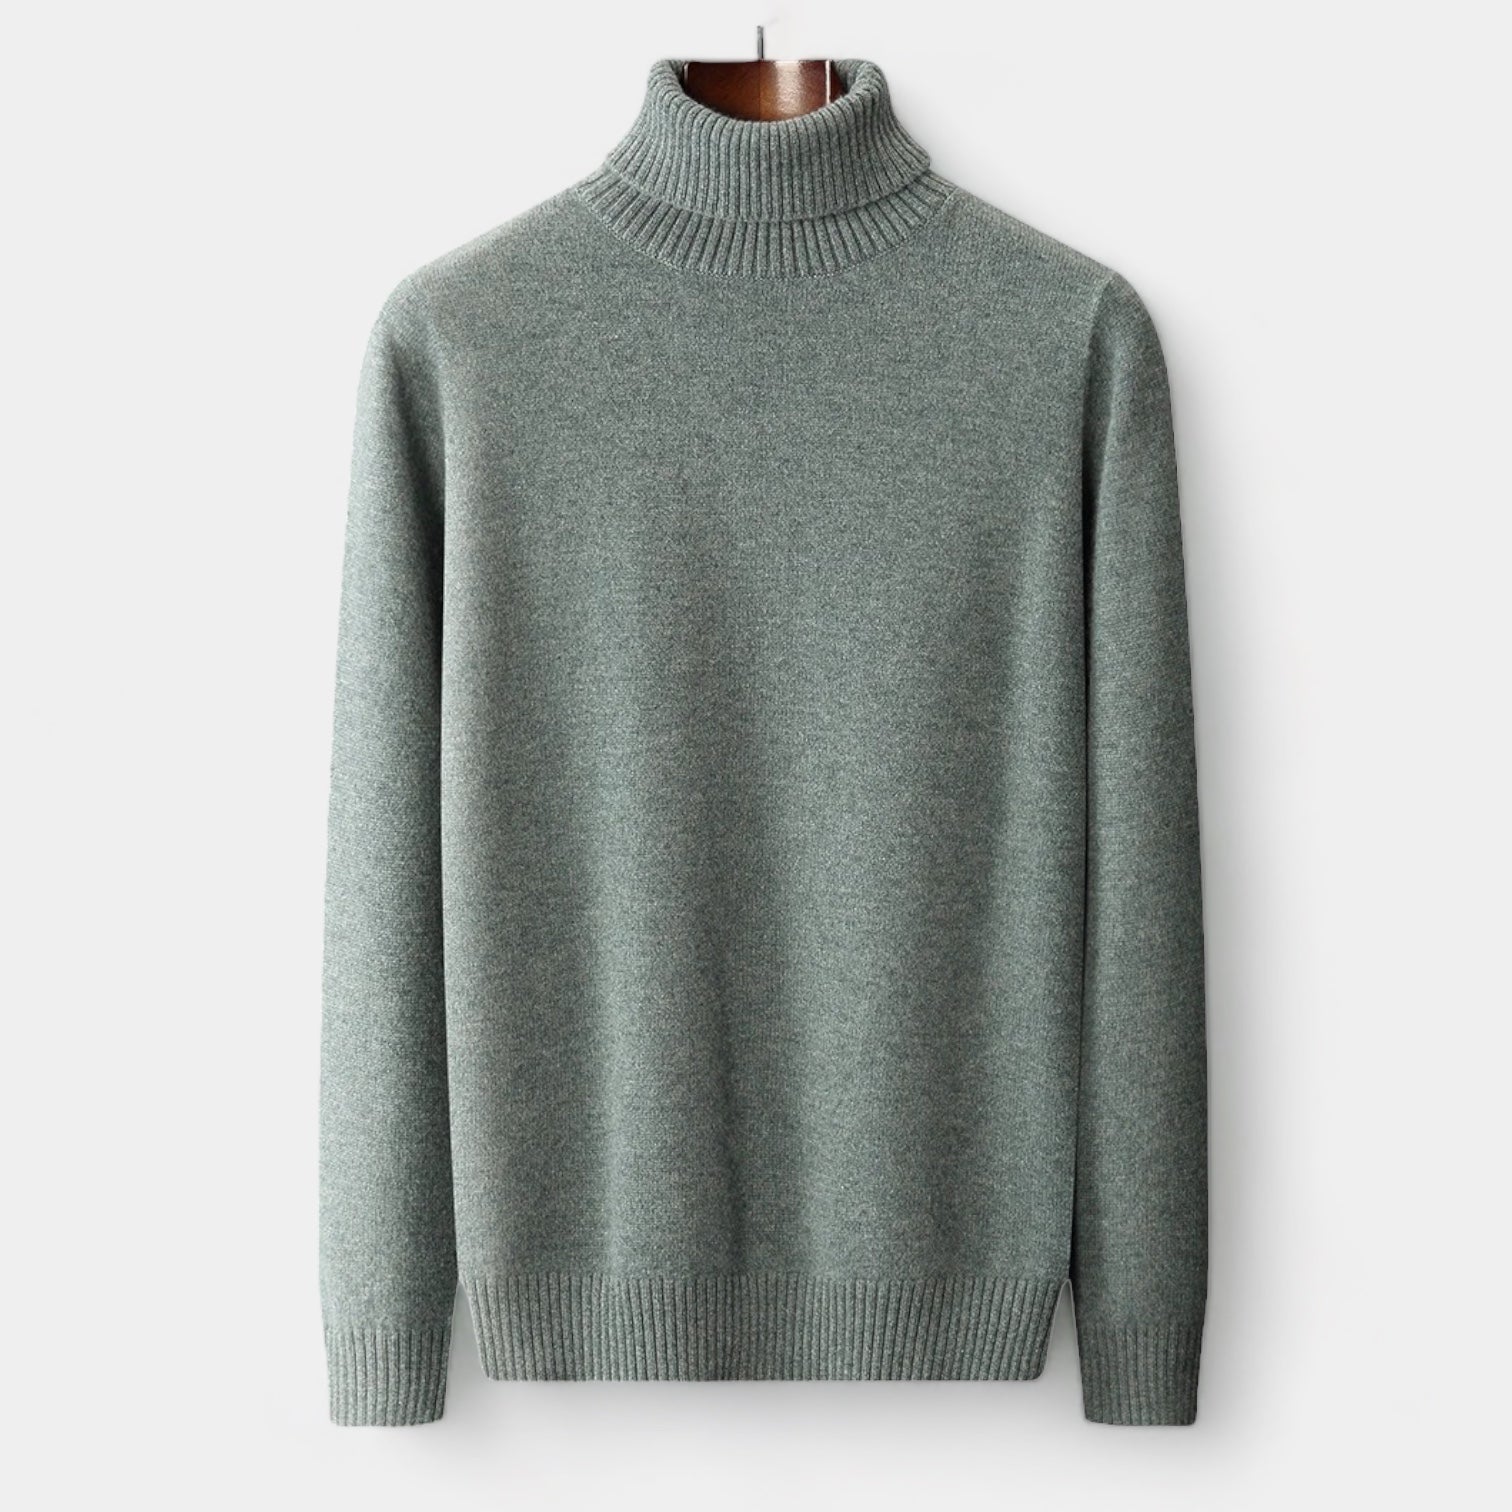 OLD MONEY Merino Wool Turtleneck Sweater